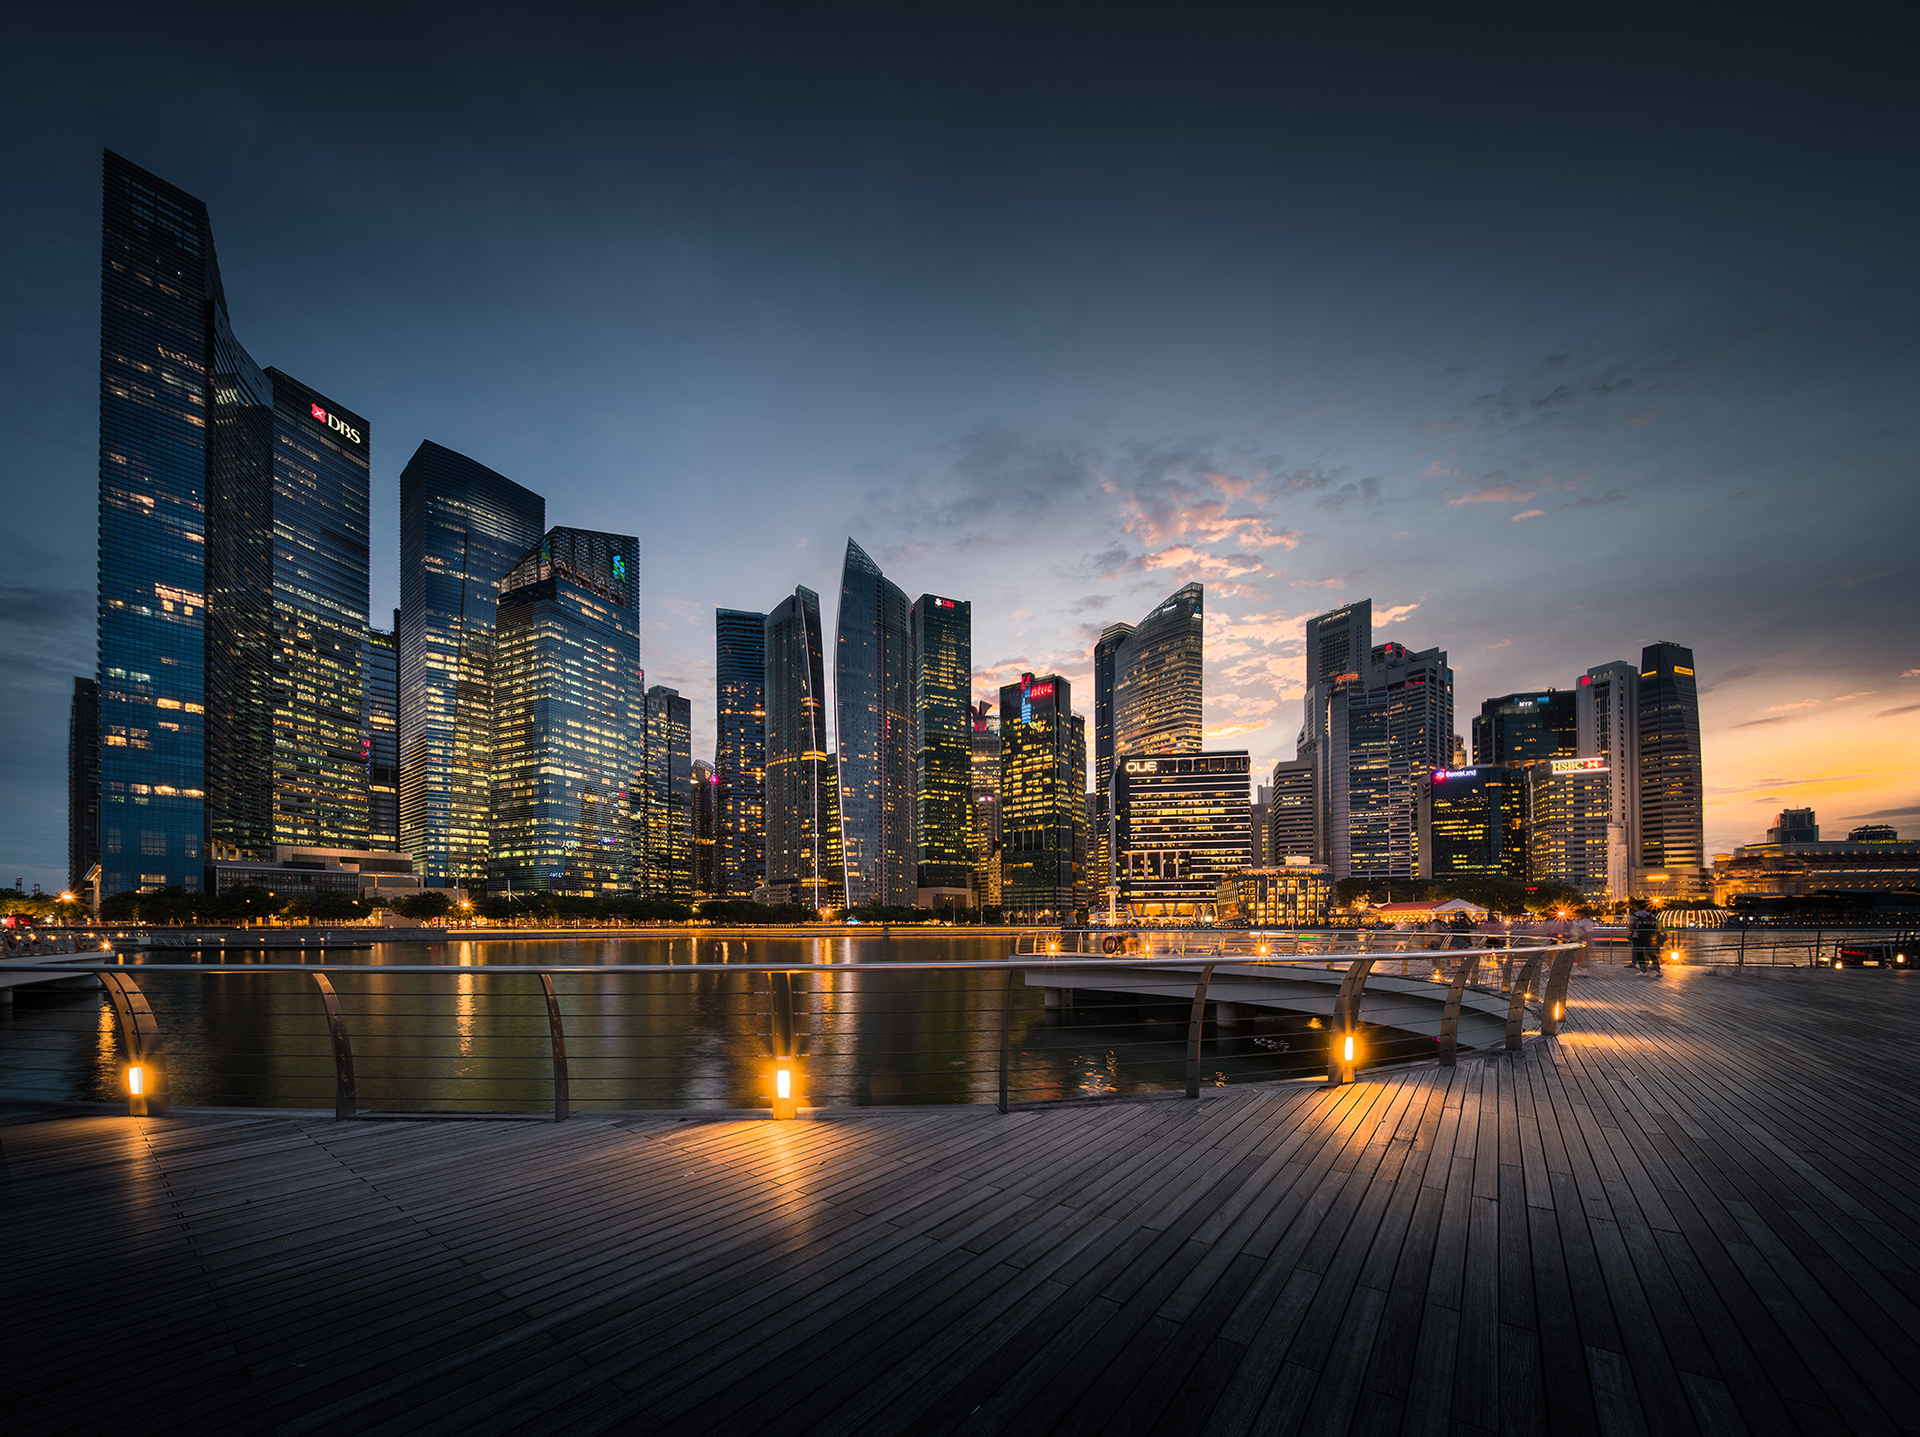 Photography: Exploring Singapore Day & Night 